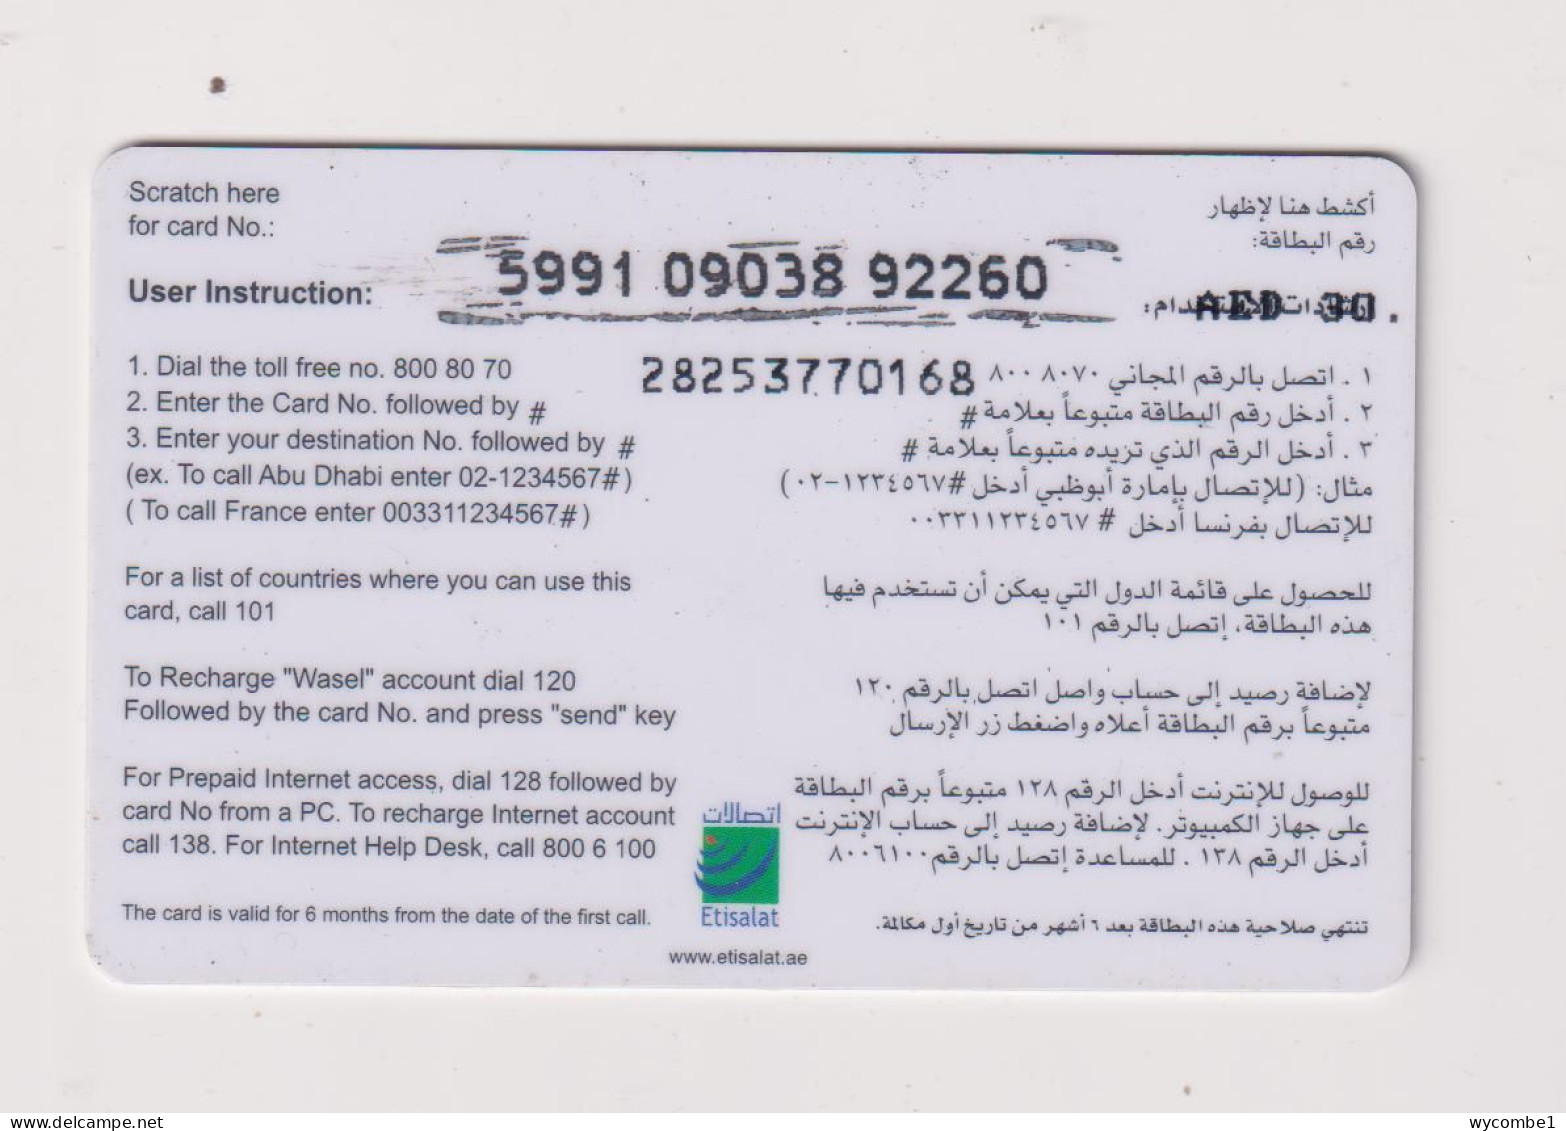 UNITED ARAB EMIRATES - Directory Inquiries And Customer Support Remote Phonecard - Ver. Arab. Emirate